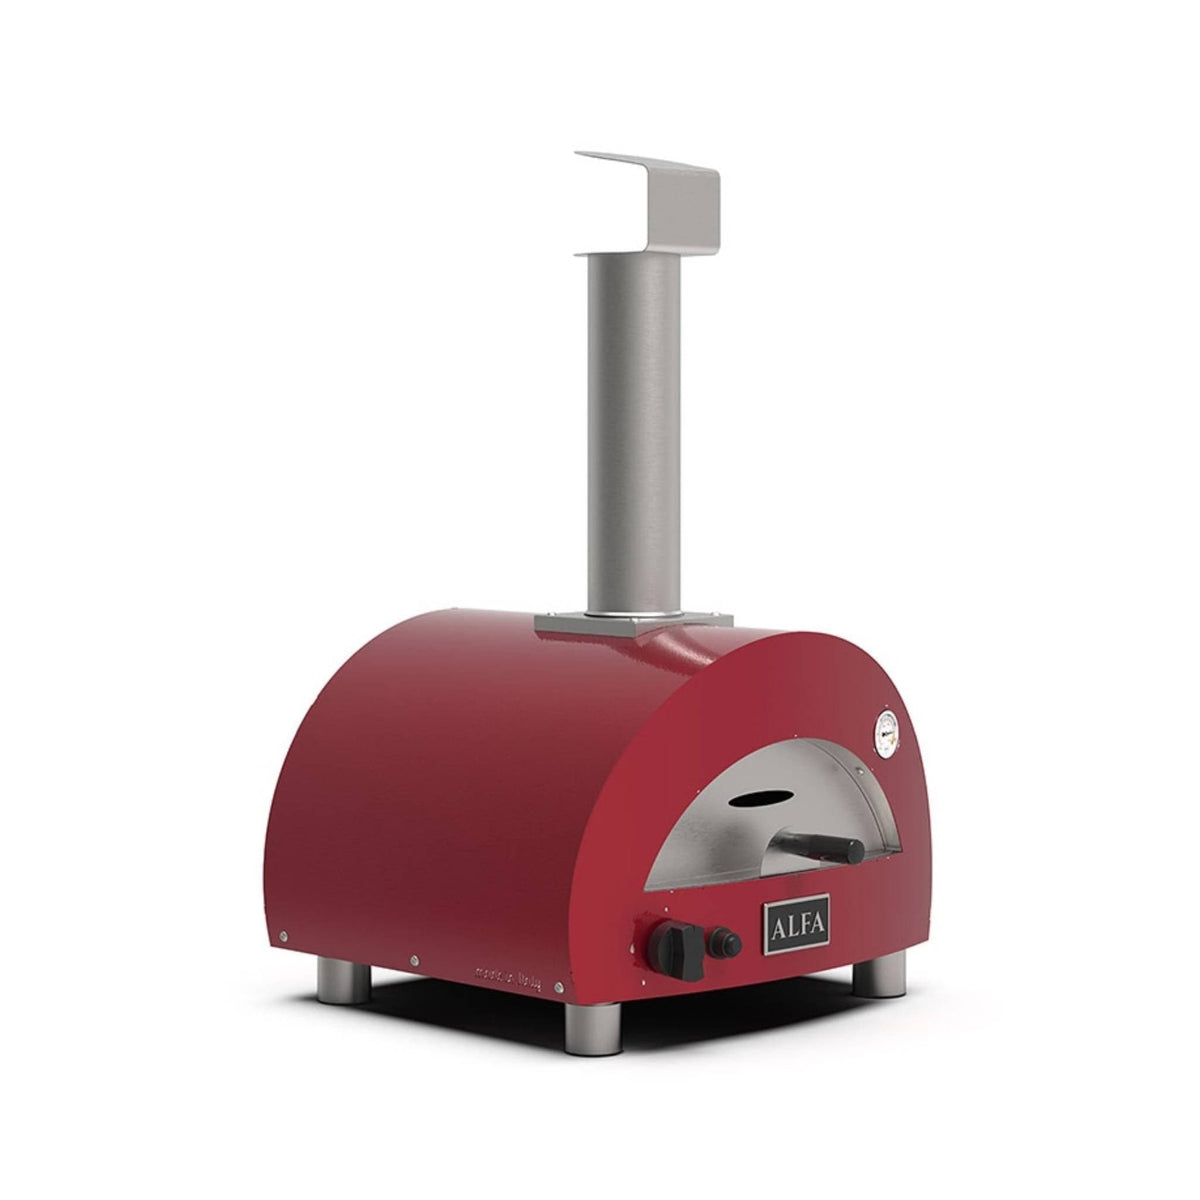 Alfa Moderno Portable Gas Pizza Oven - Culinary Hardware